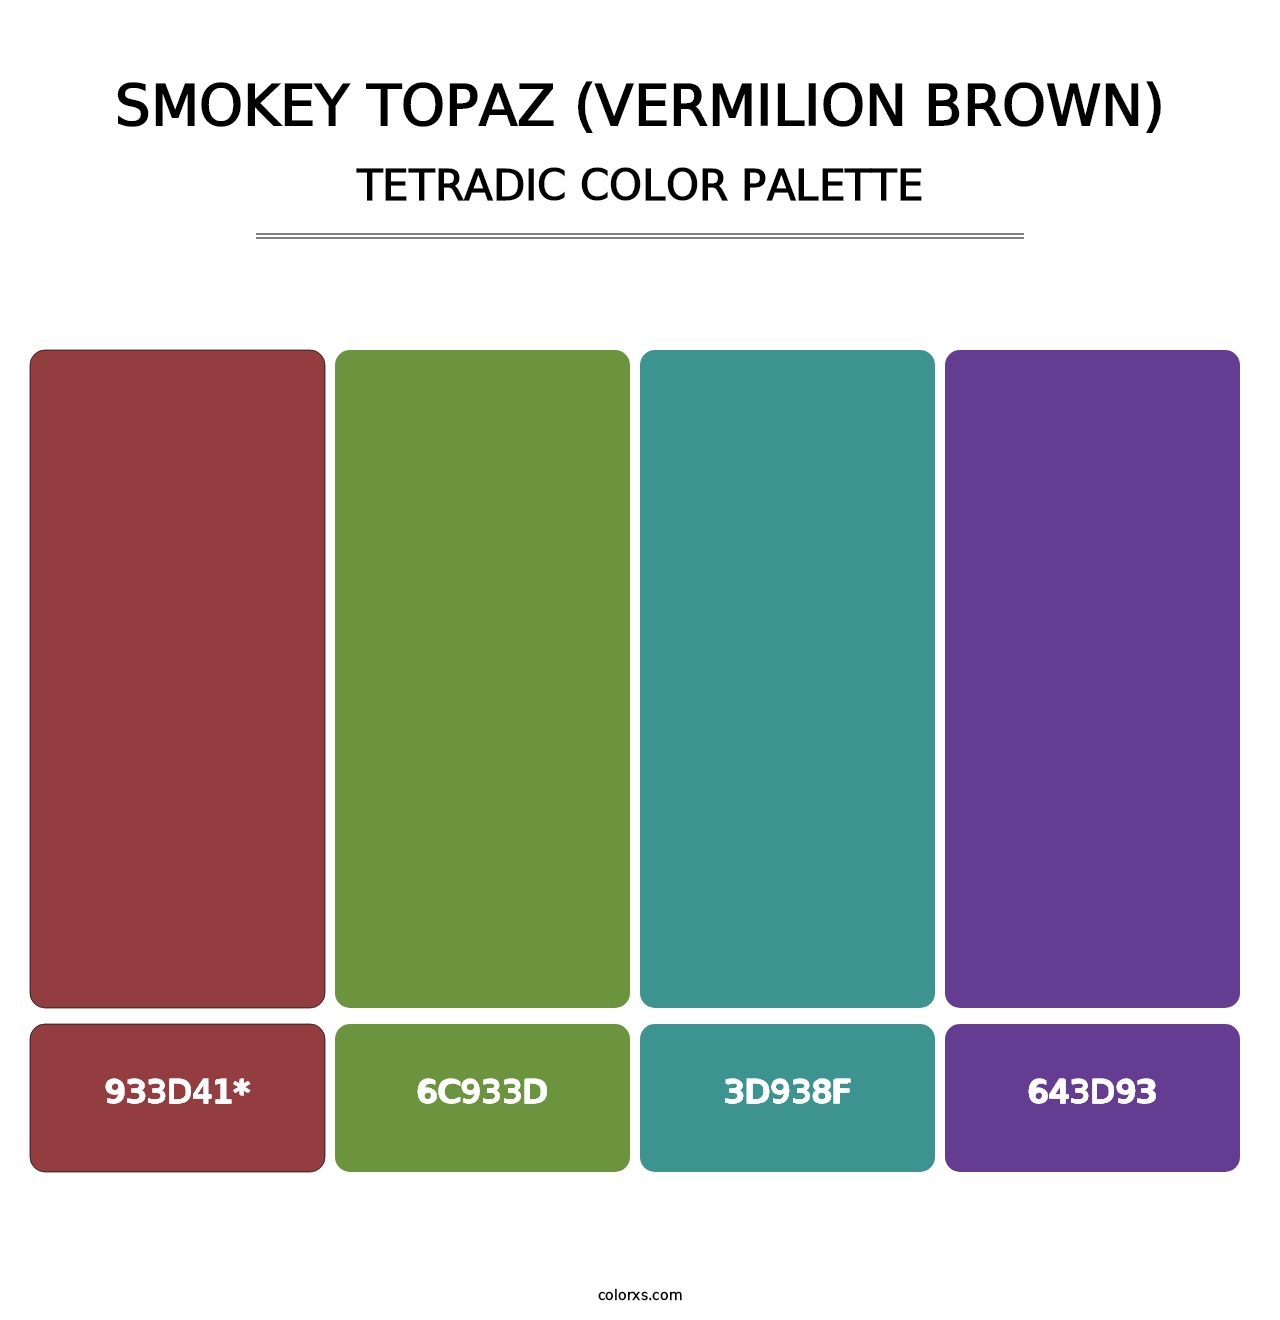 Smokey Topaz (Vermilion Brown) - Tetradic Color Palette